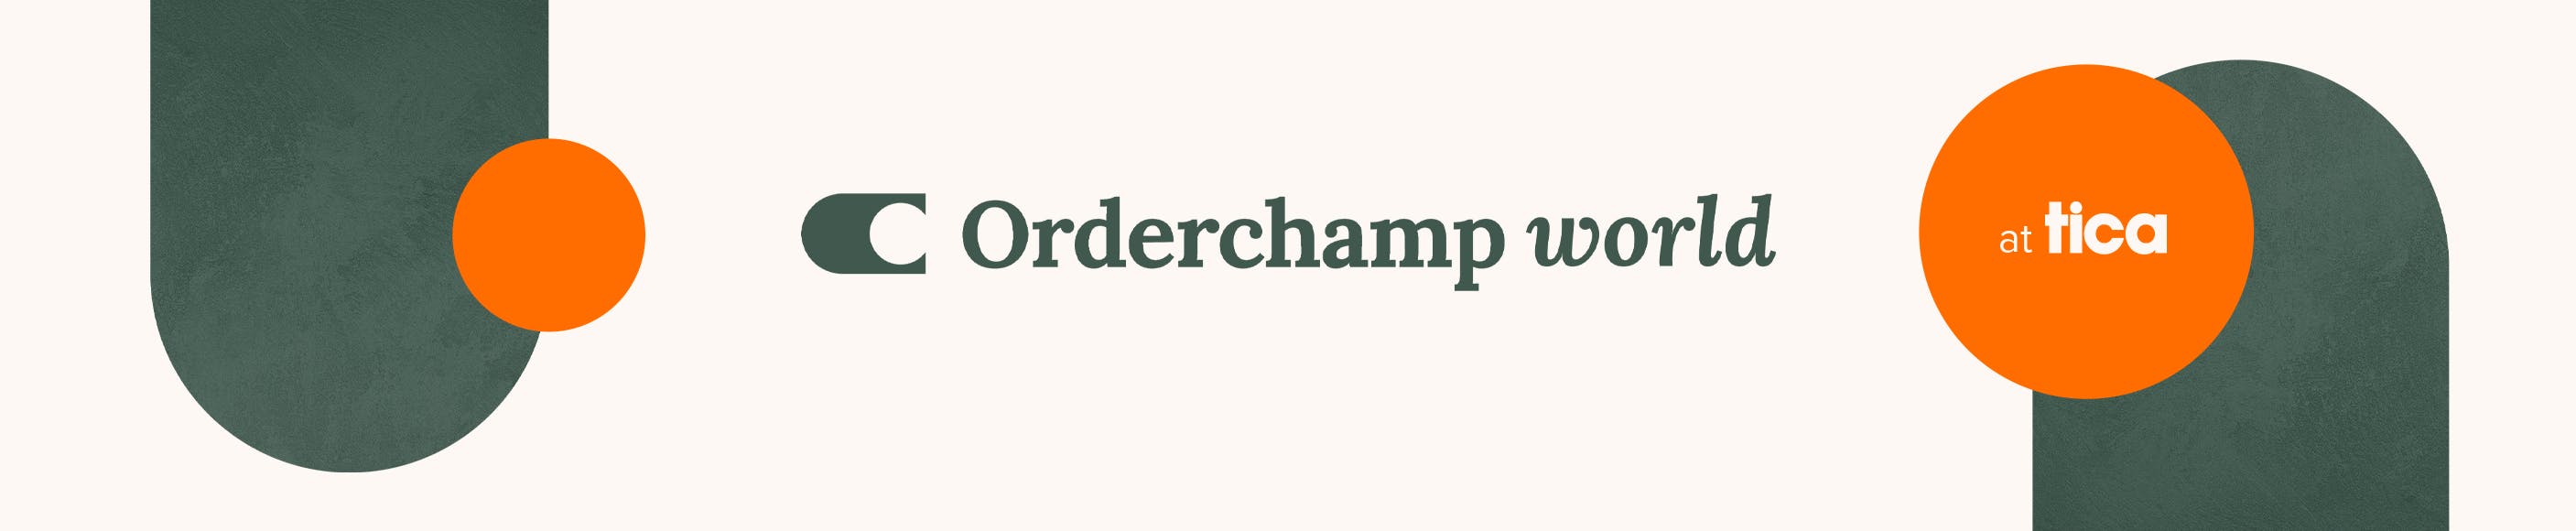 Orderchamp World